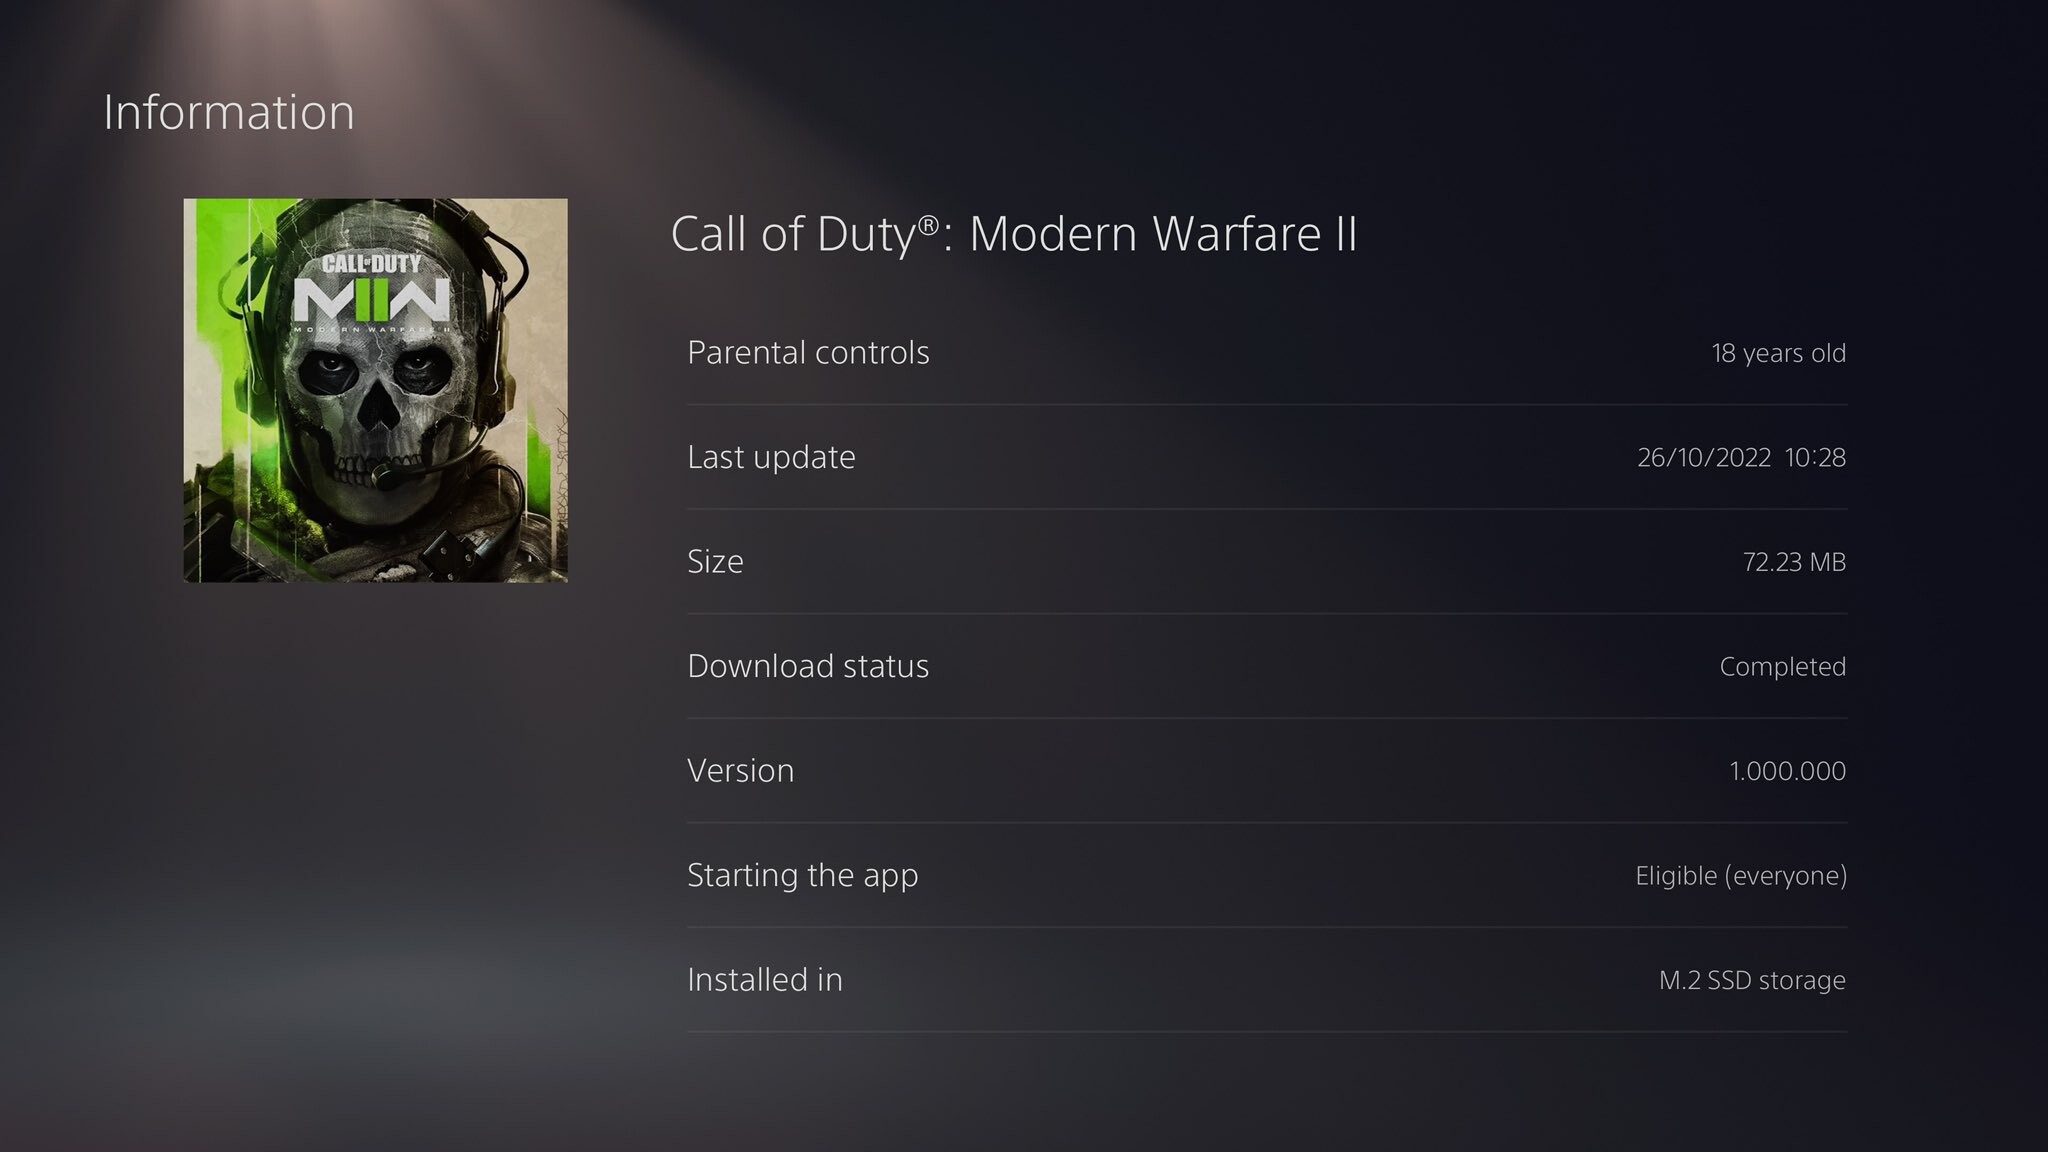 Call of Duty: Modern Warfare 2 - PC COD MW2 with manual. Clean Disc.